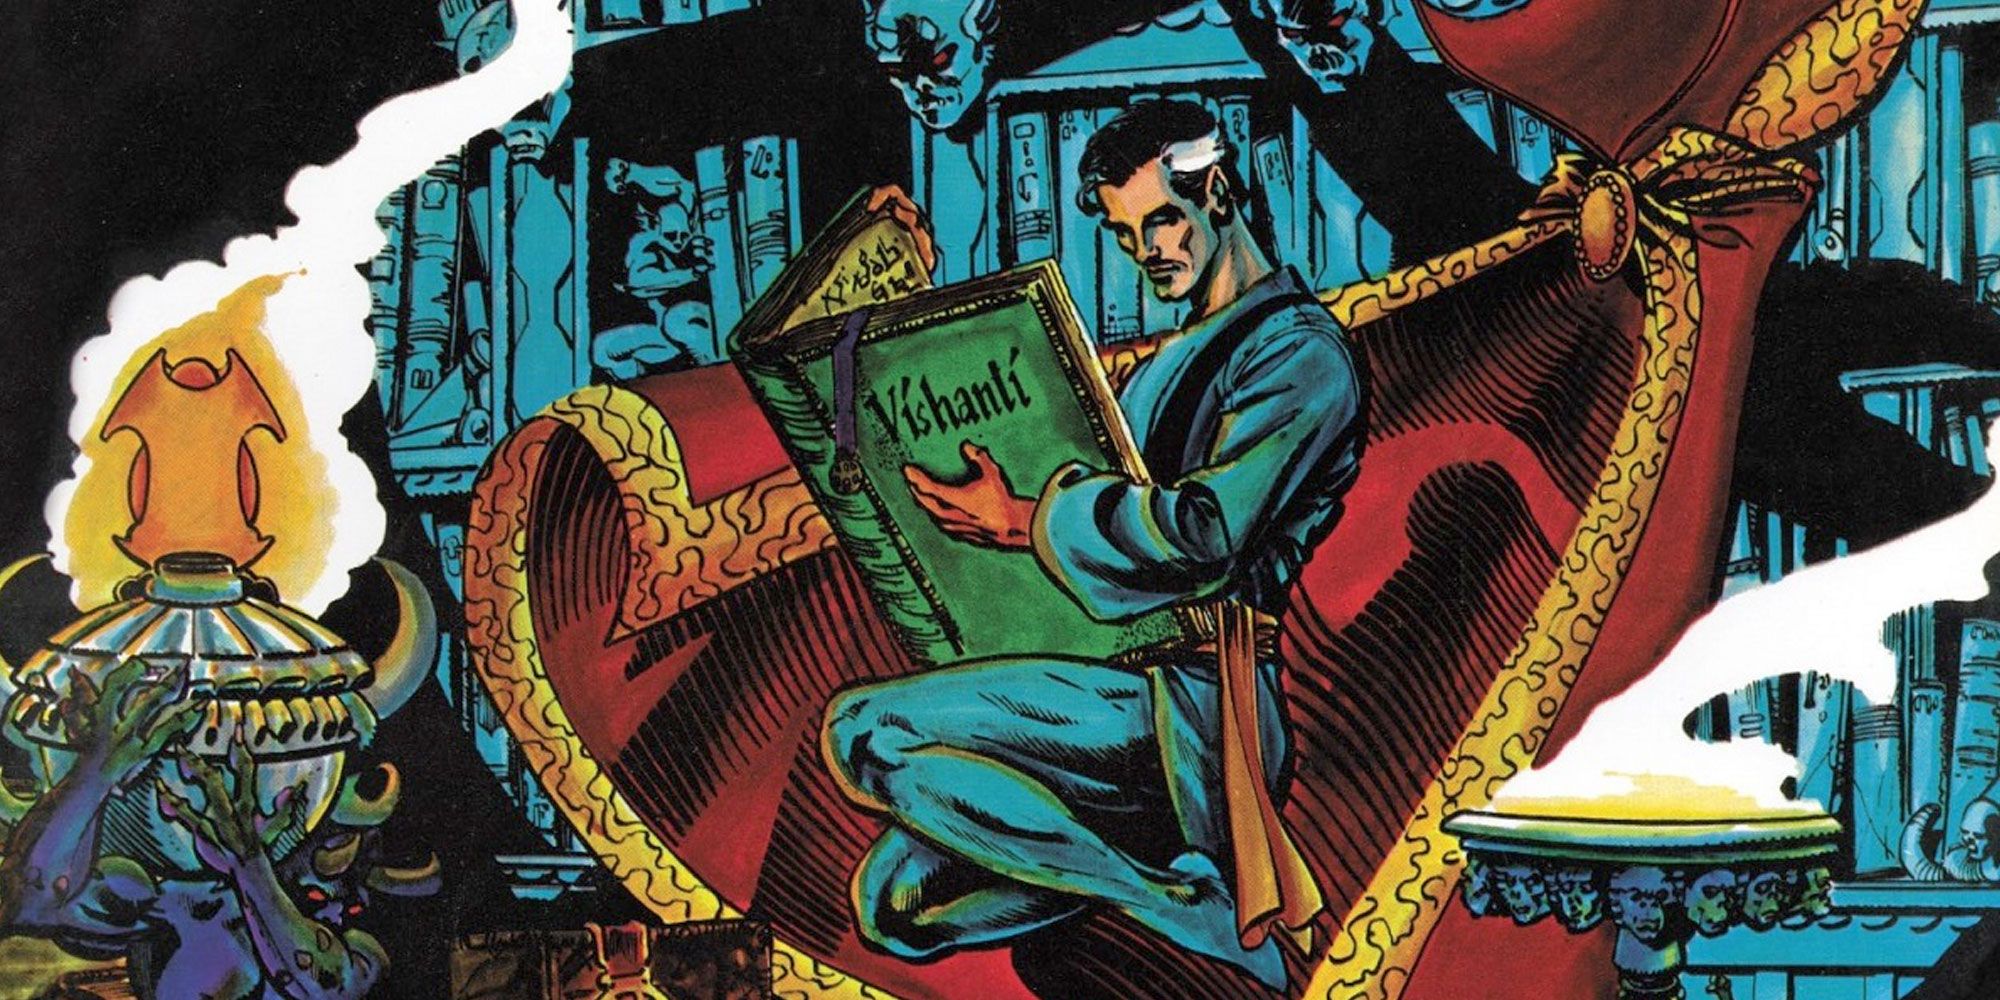 Doctor Strange reading the book of Vishanti in Marvel comics